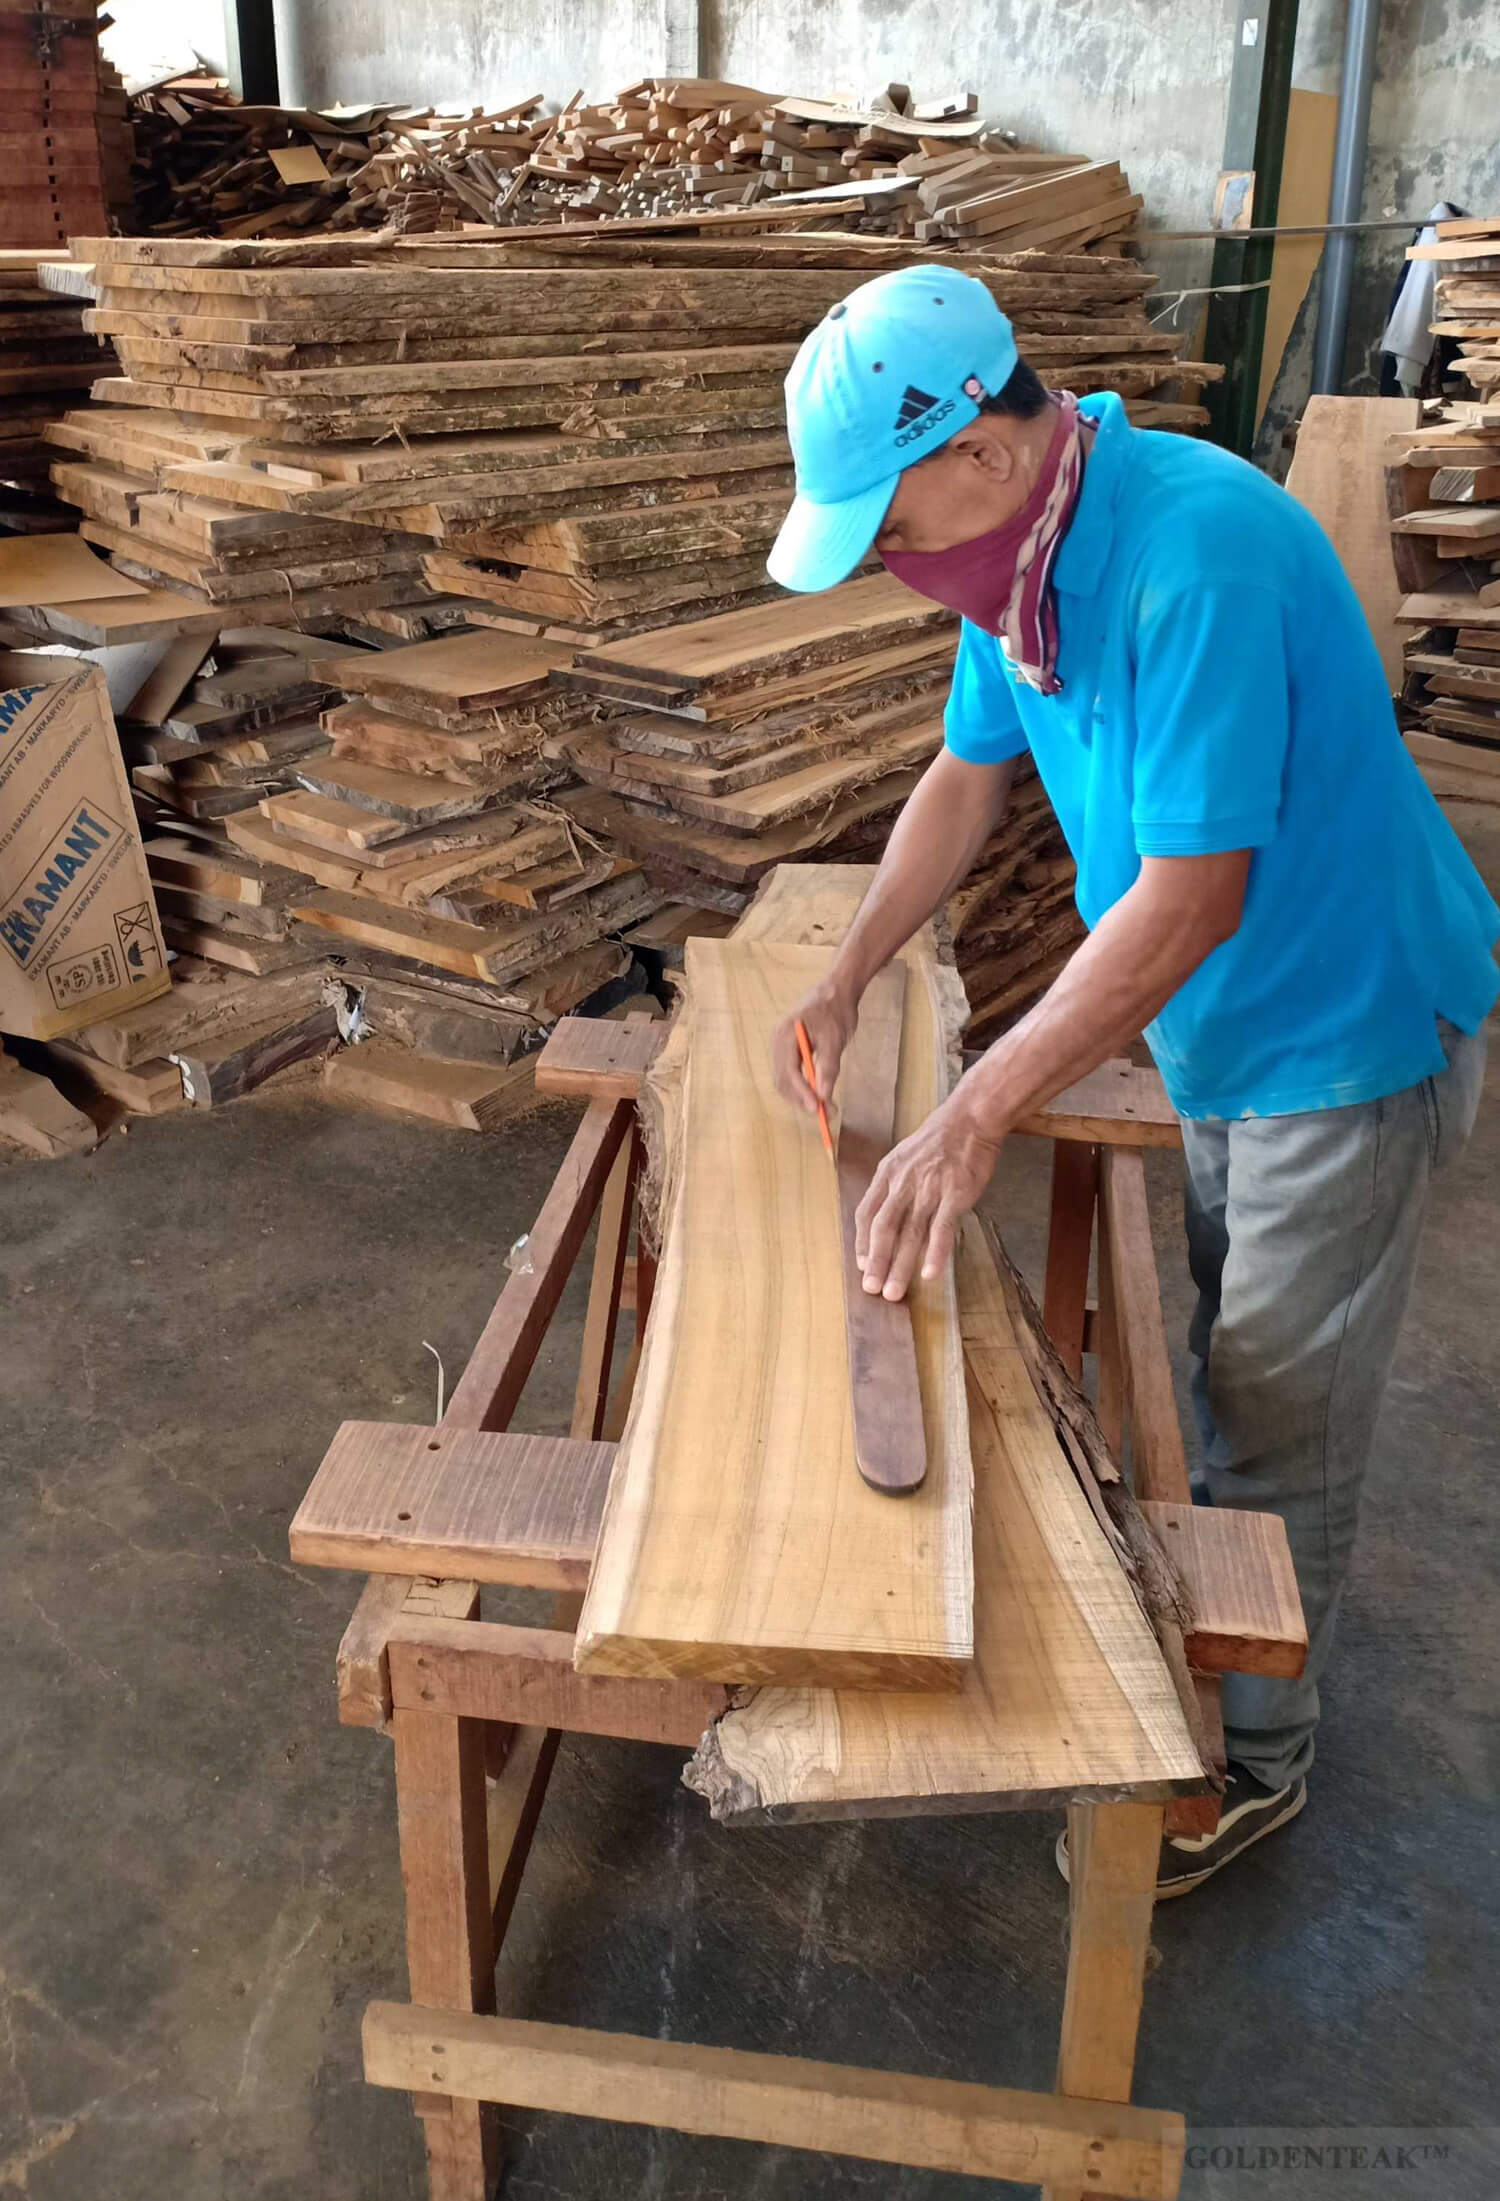 Goldenteak uses Grade A Teak Wood